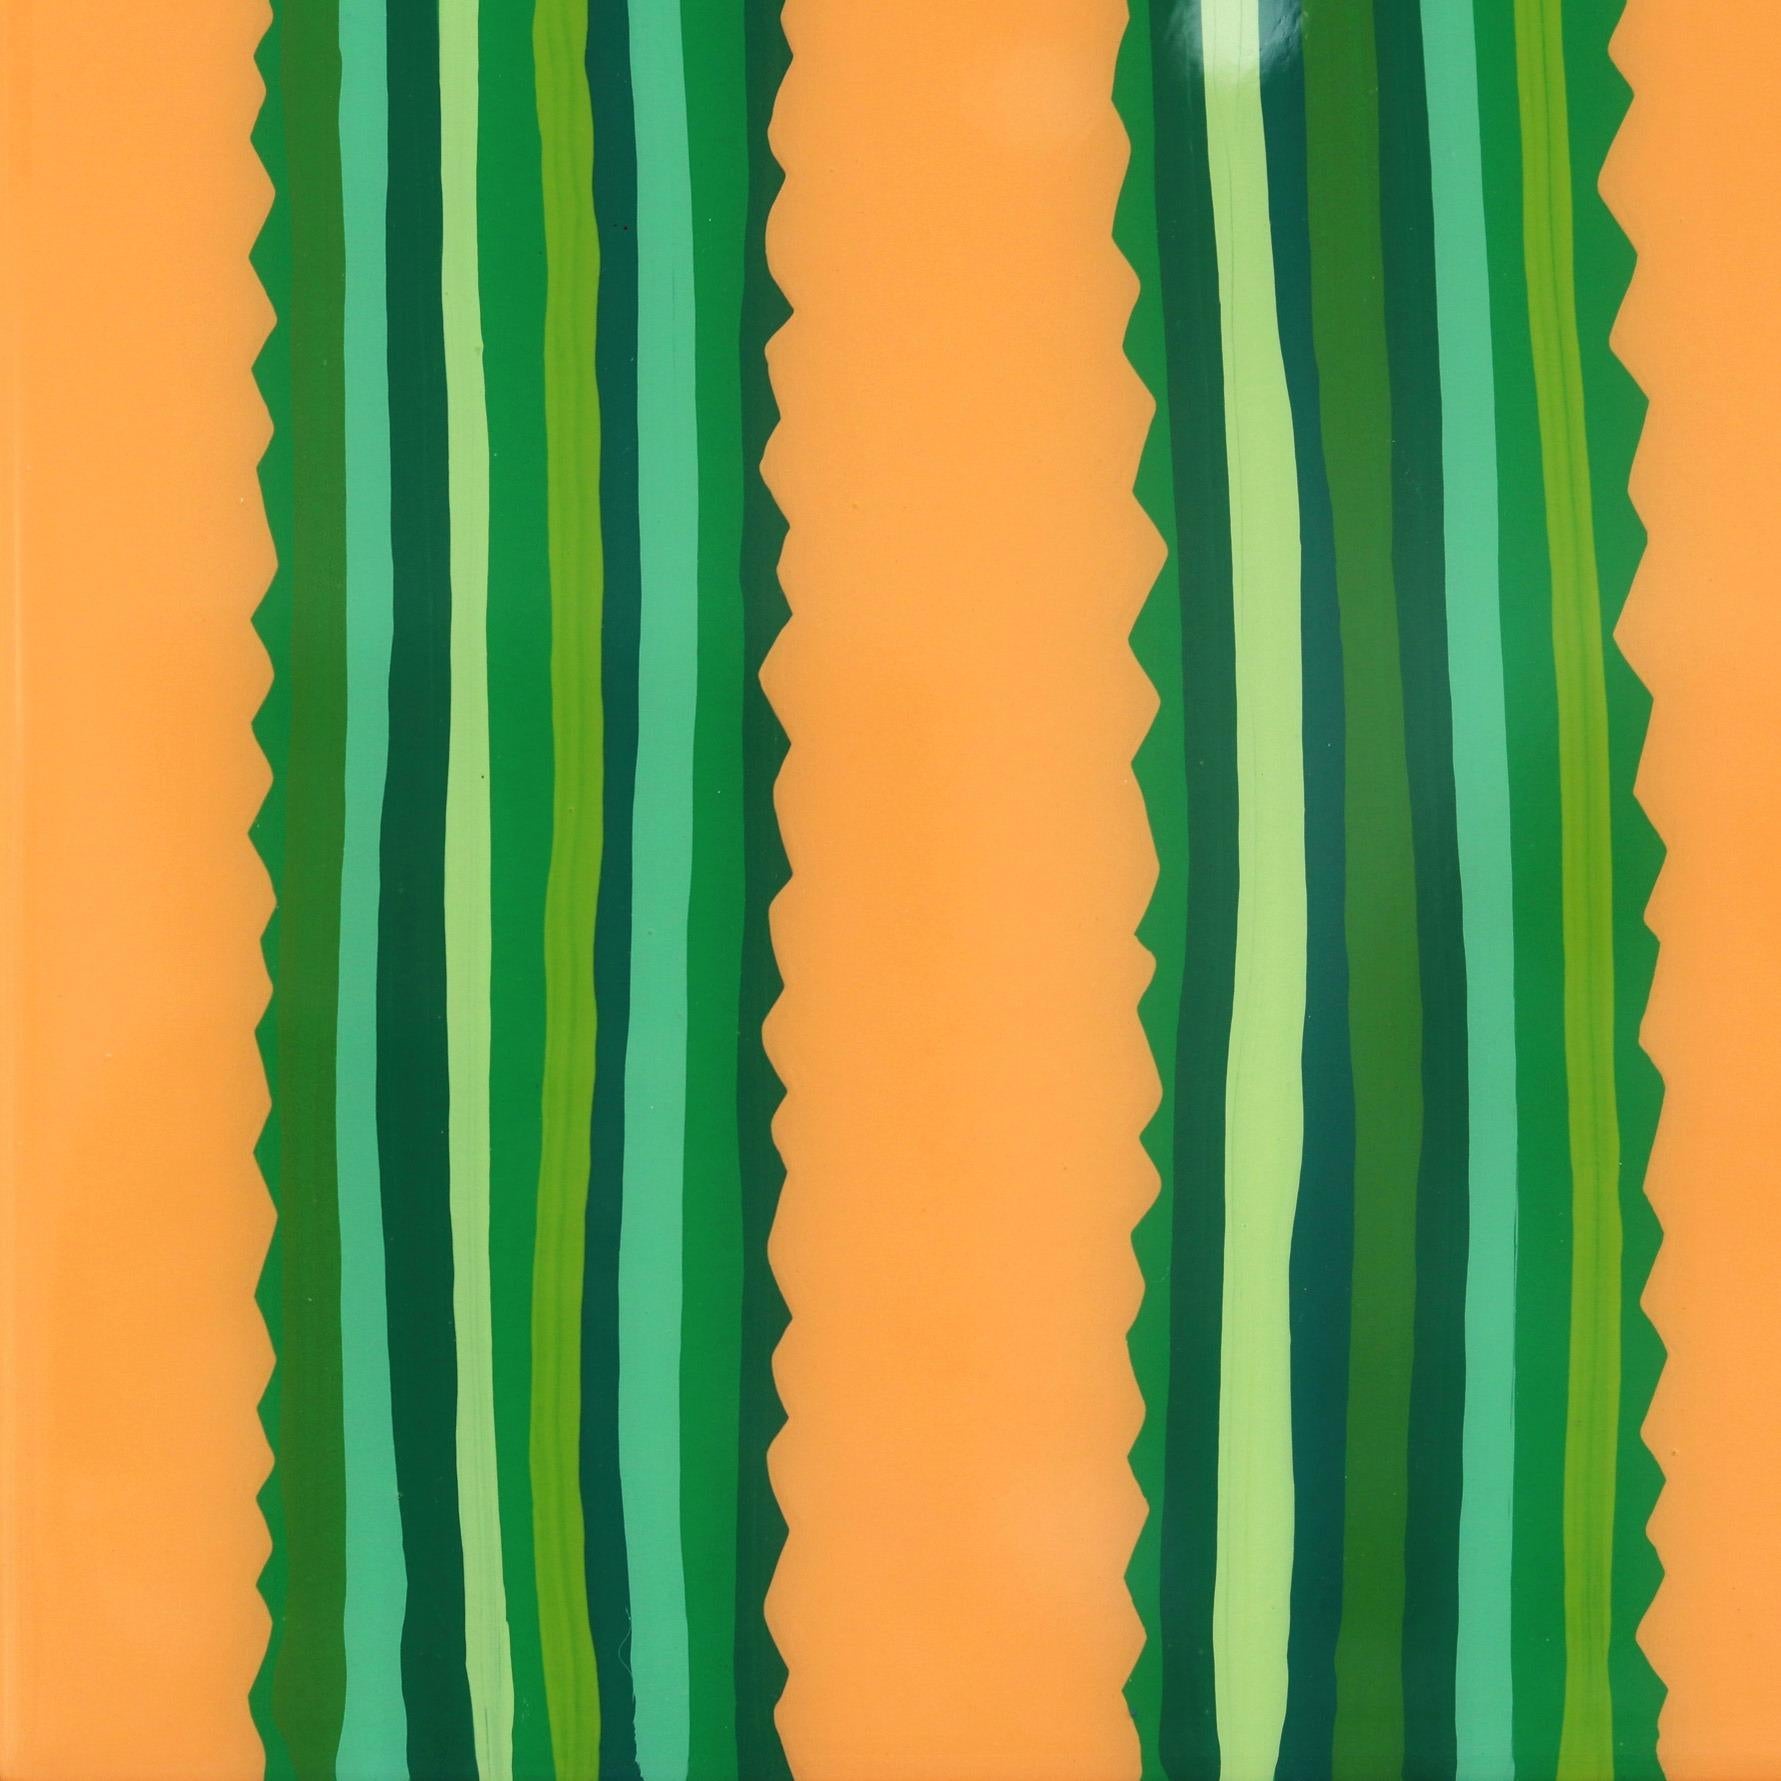 Velloso - Vibrant Orange Green Southwest Inspired Pop Art Cactus Painting For Sale 4